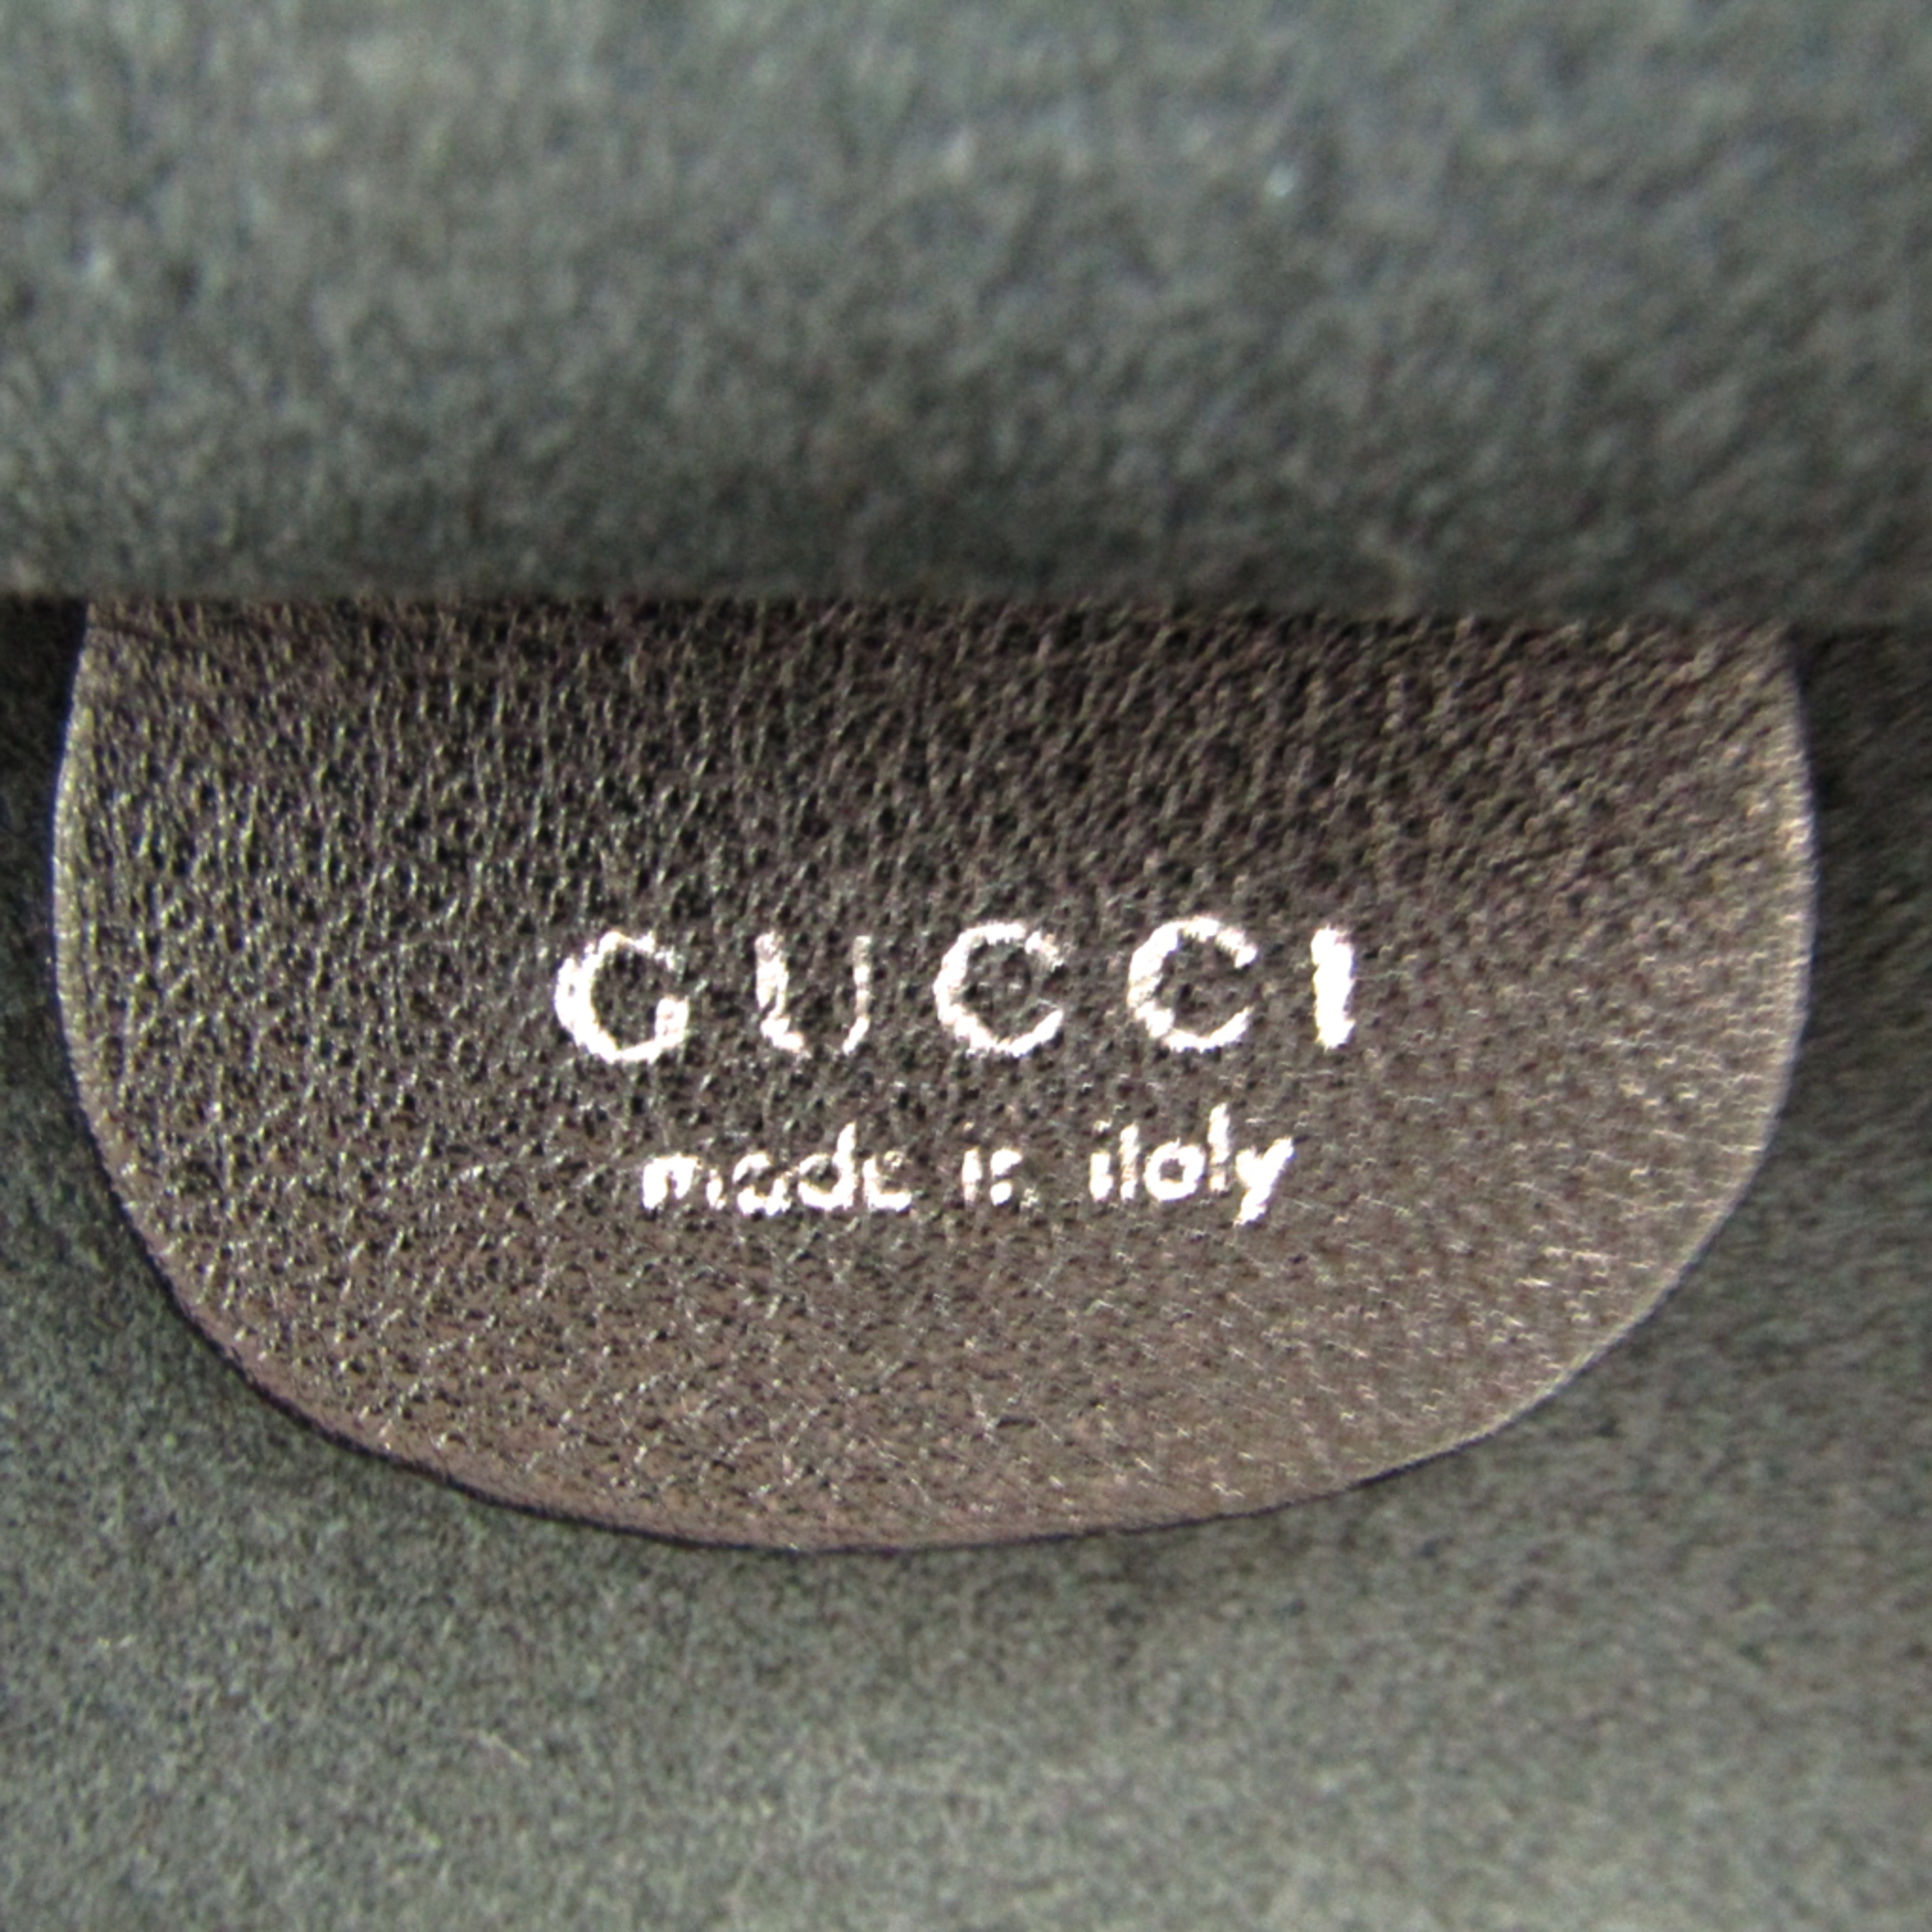 Gucci Women's Leather Boston Bag Black